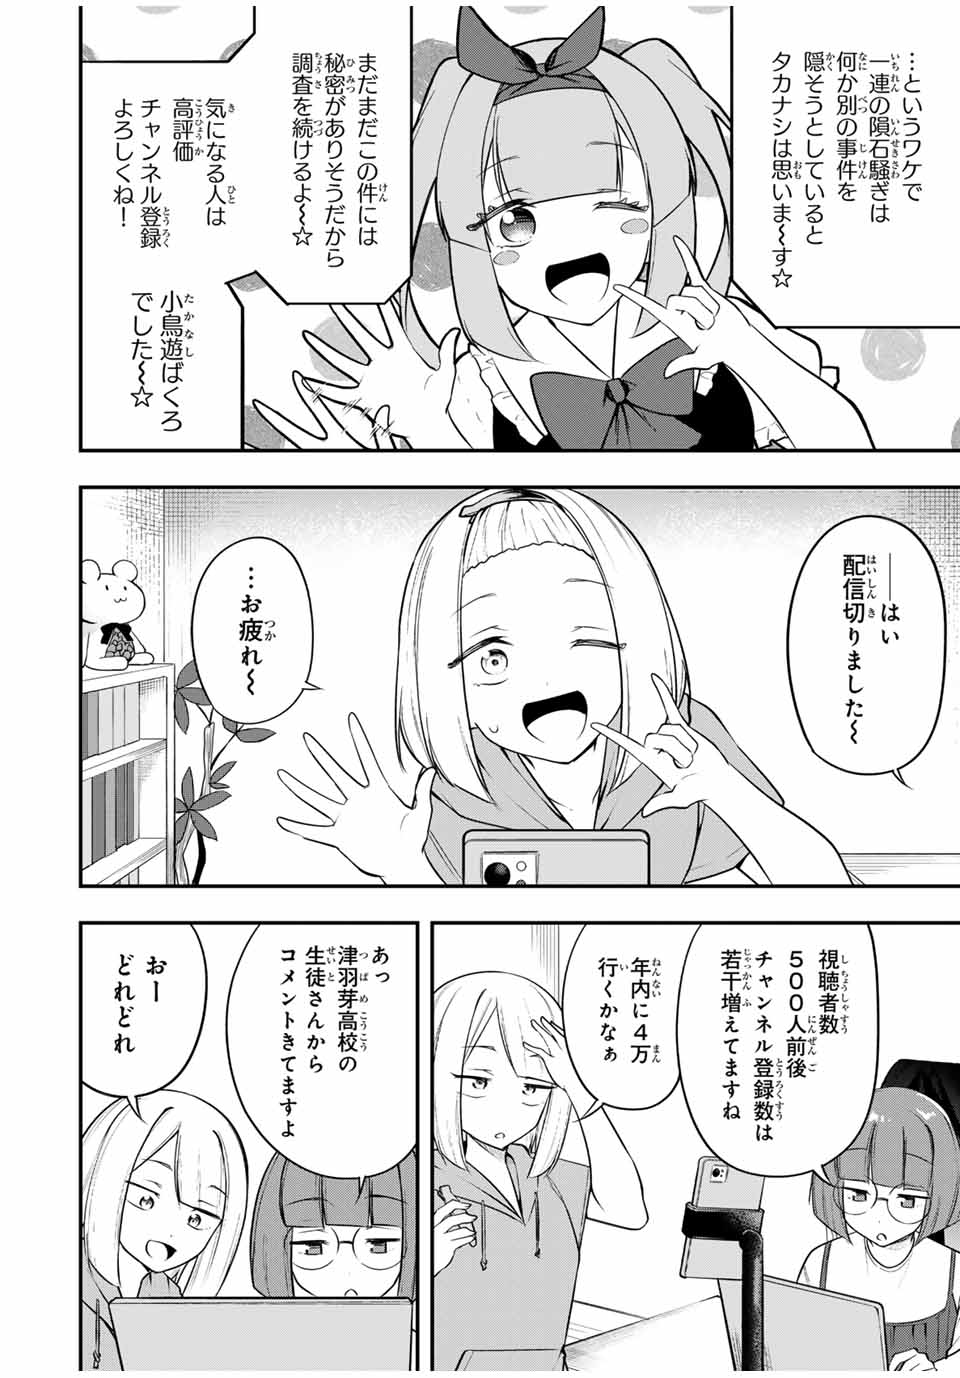 Heroine wa xx Okasegitai - Chapter 13 - Page 4